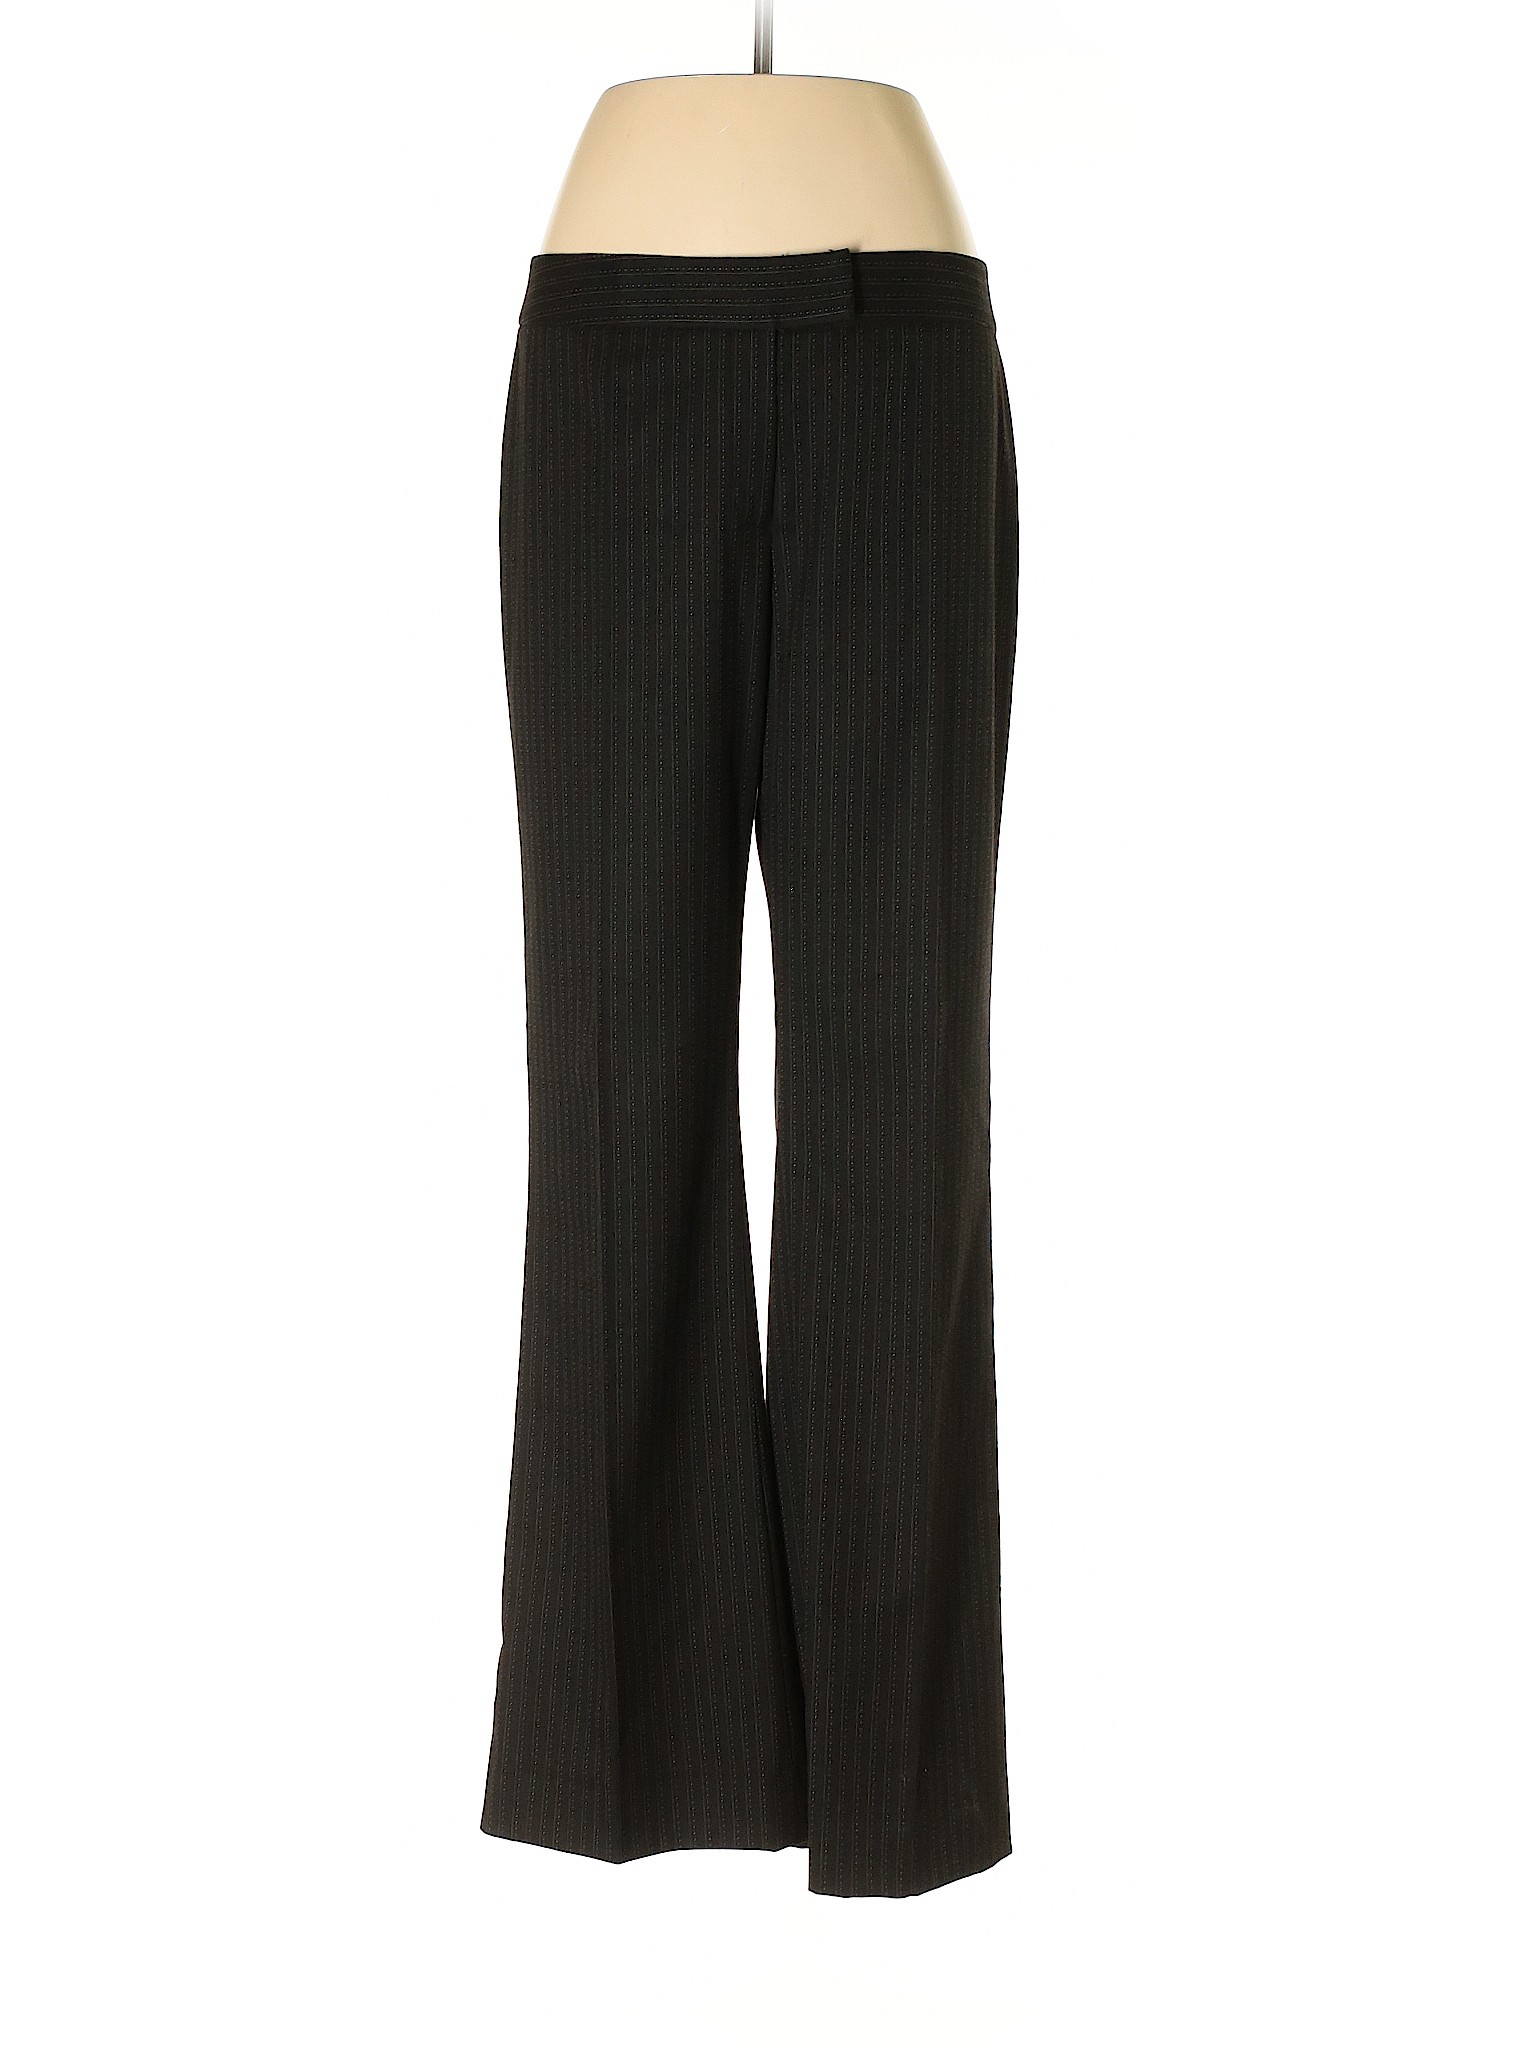 Antonio Melani Women Black Dress Pants 8 | eBay